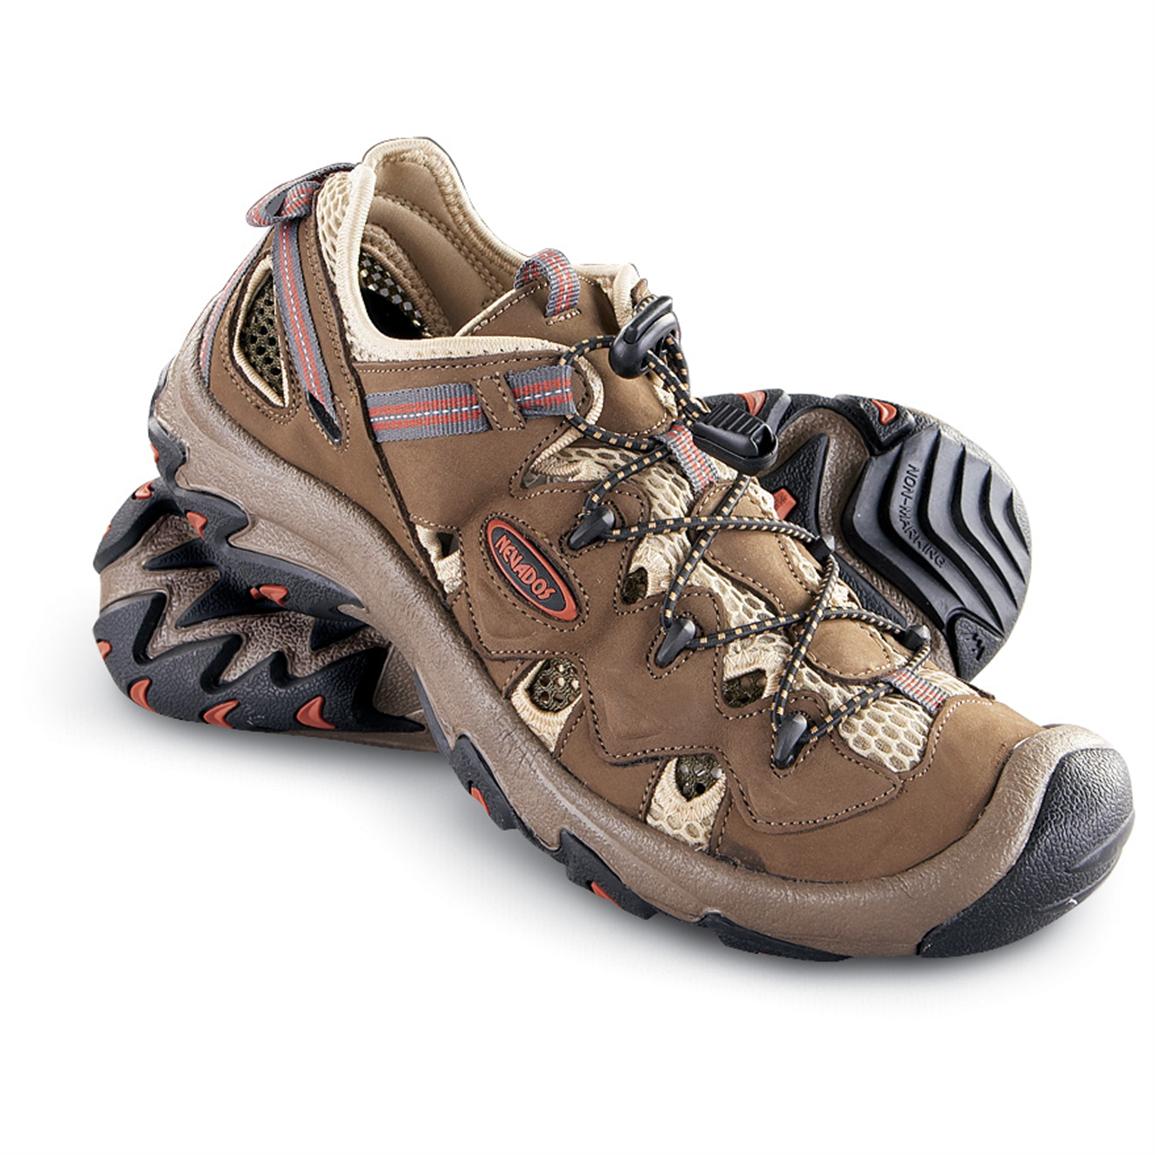 Men's Nevados® Yahara Low Trail Sandals,Brown - 120735, Sandals & Flip